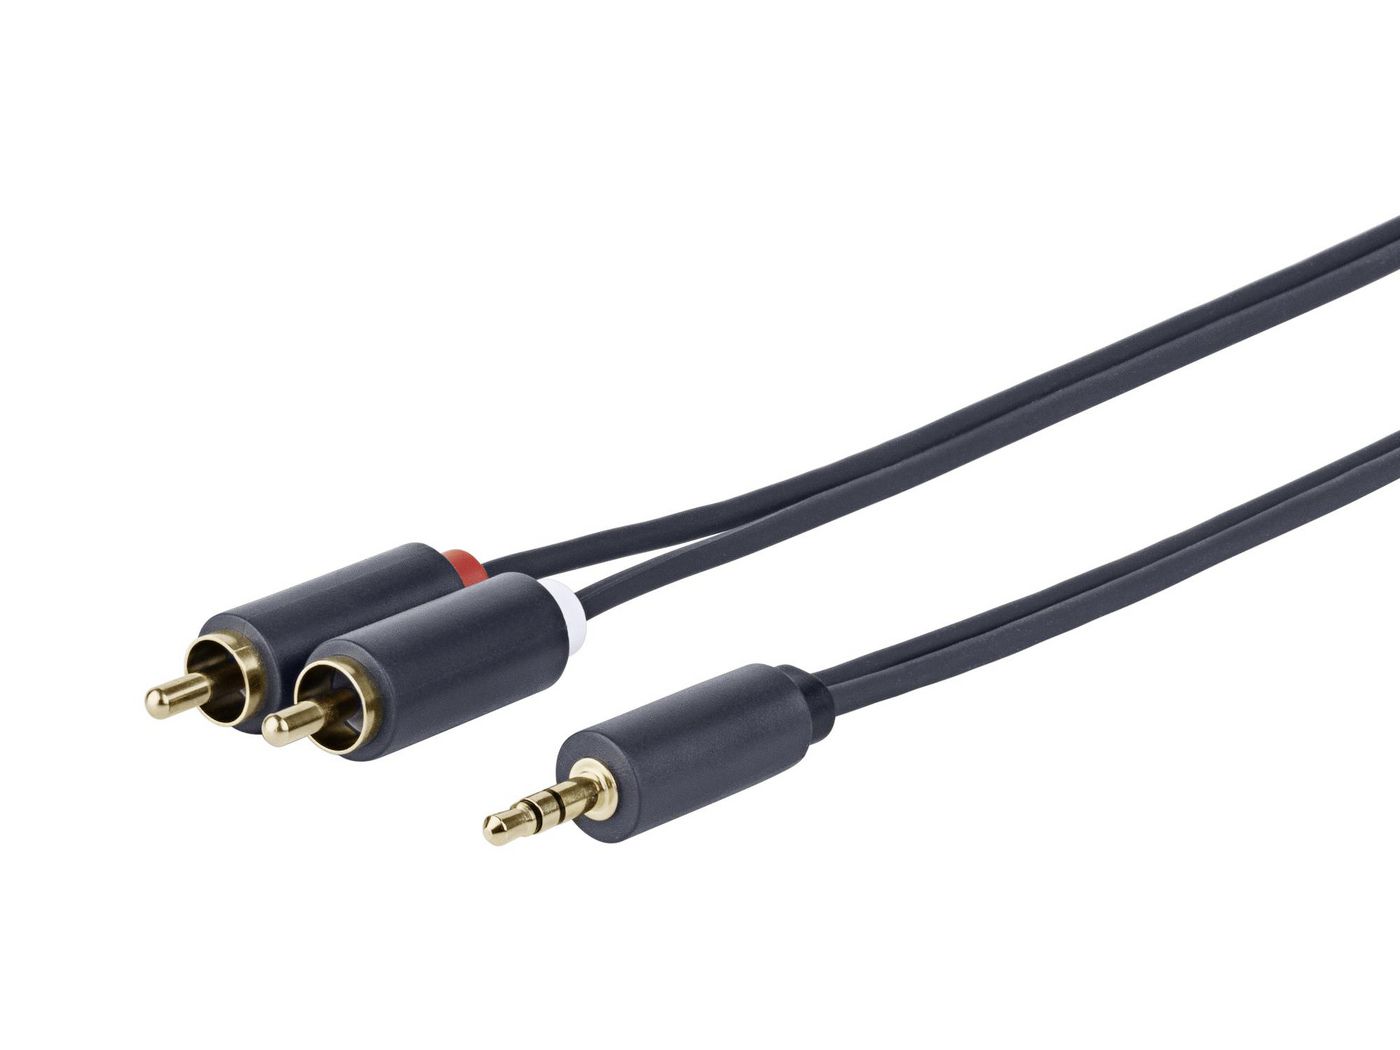 EET VivoLink PROMJRCA10 10m 3.5mm 2 x RCA Schwarz Audio-Kabel (PROMJRCA10)